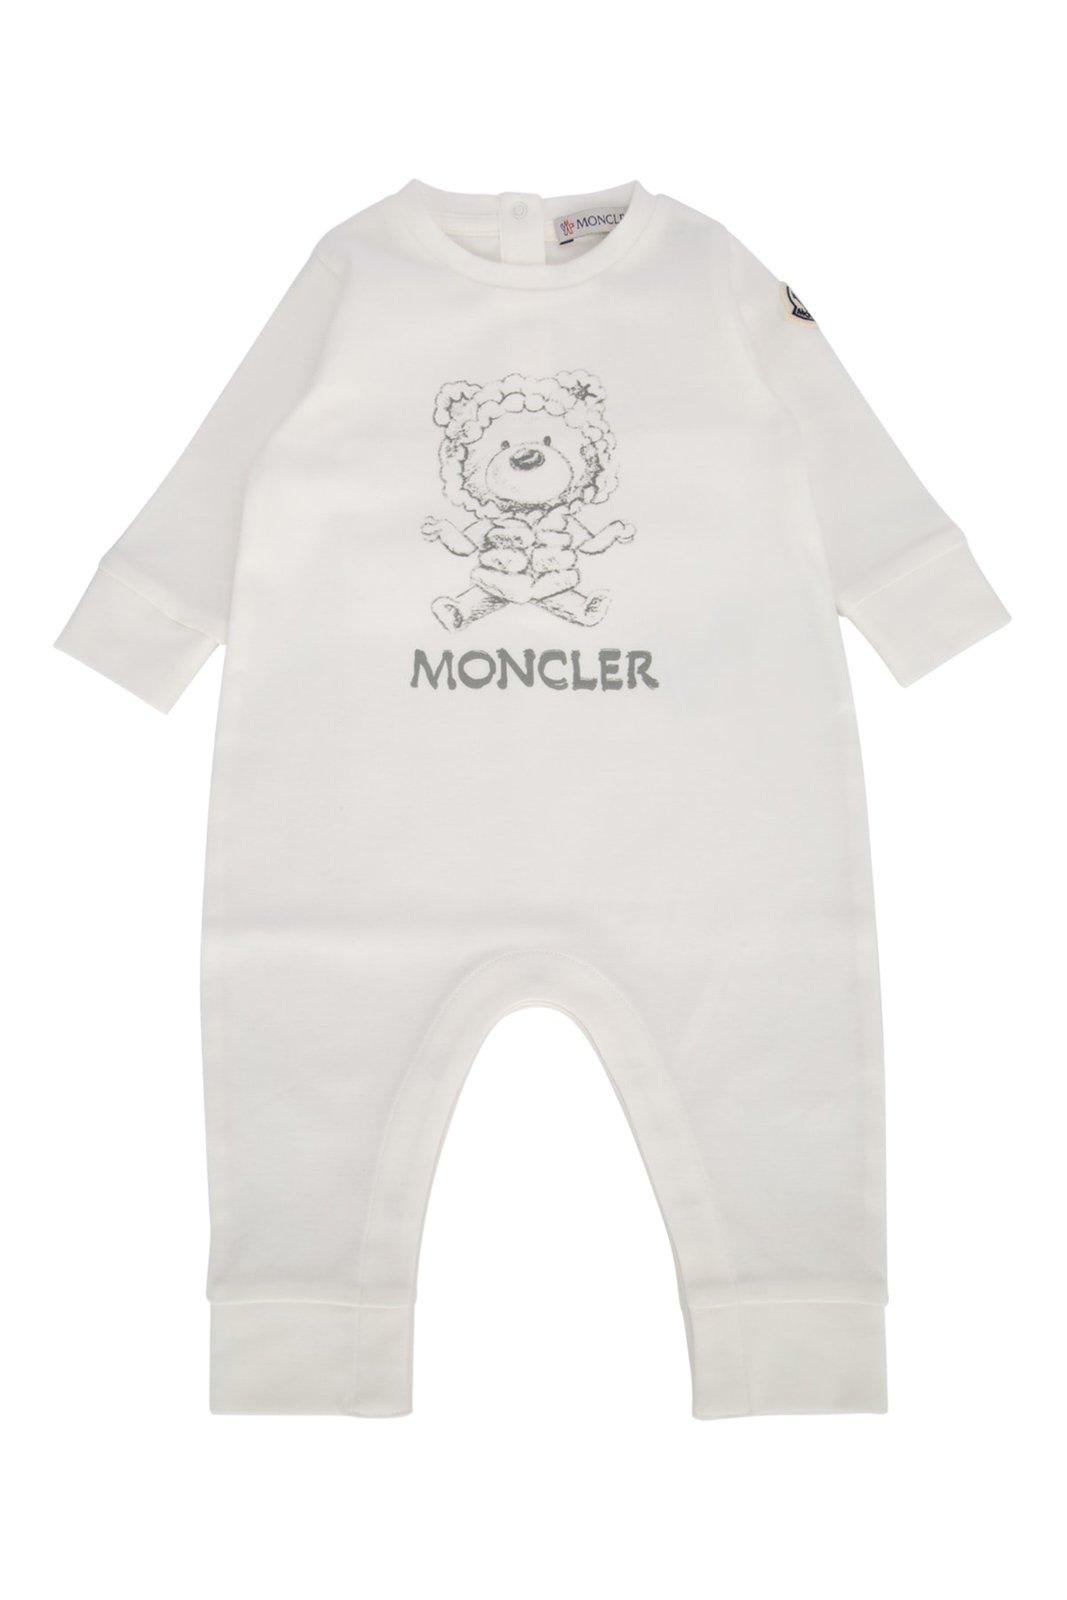 Moncler Kids' Teddy Bear Motif Romper In White